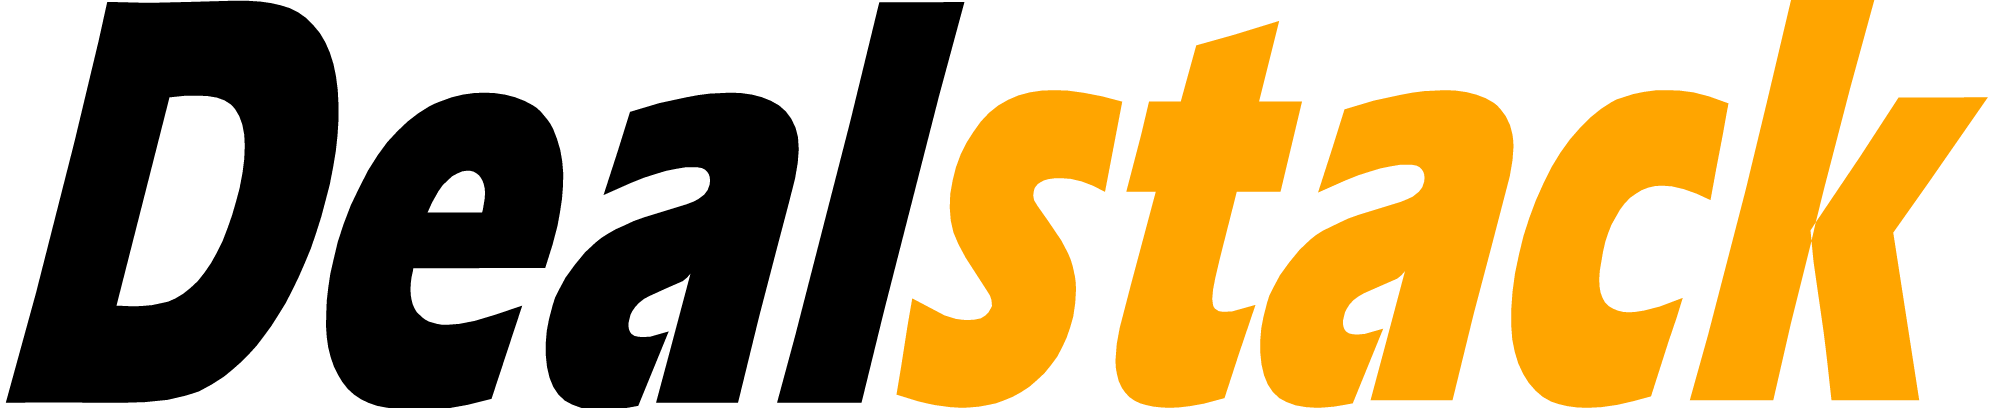 dealstack-logo